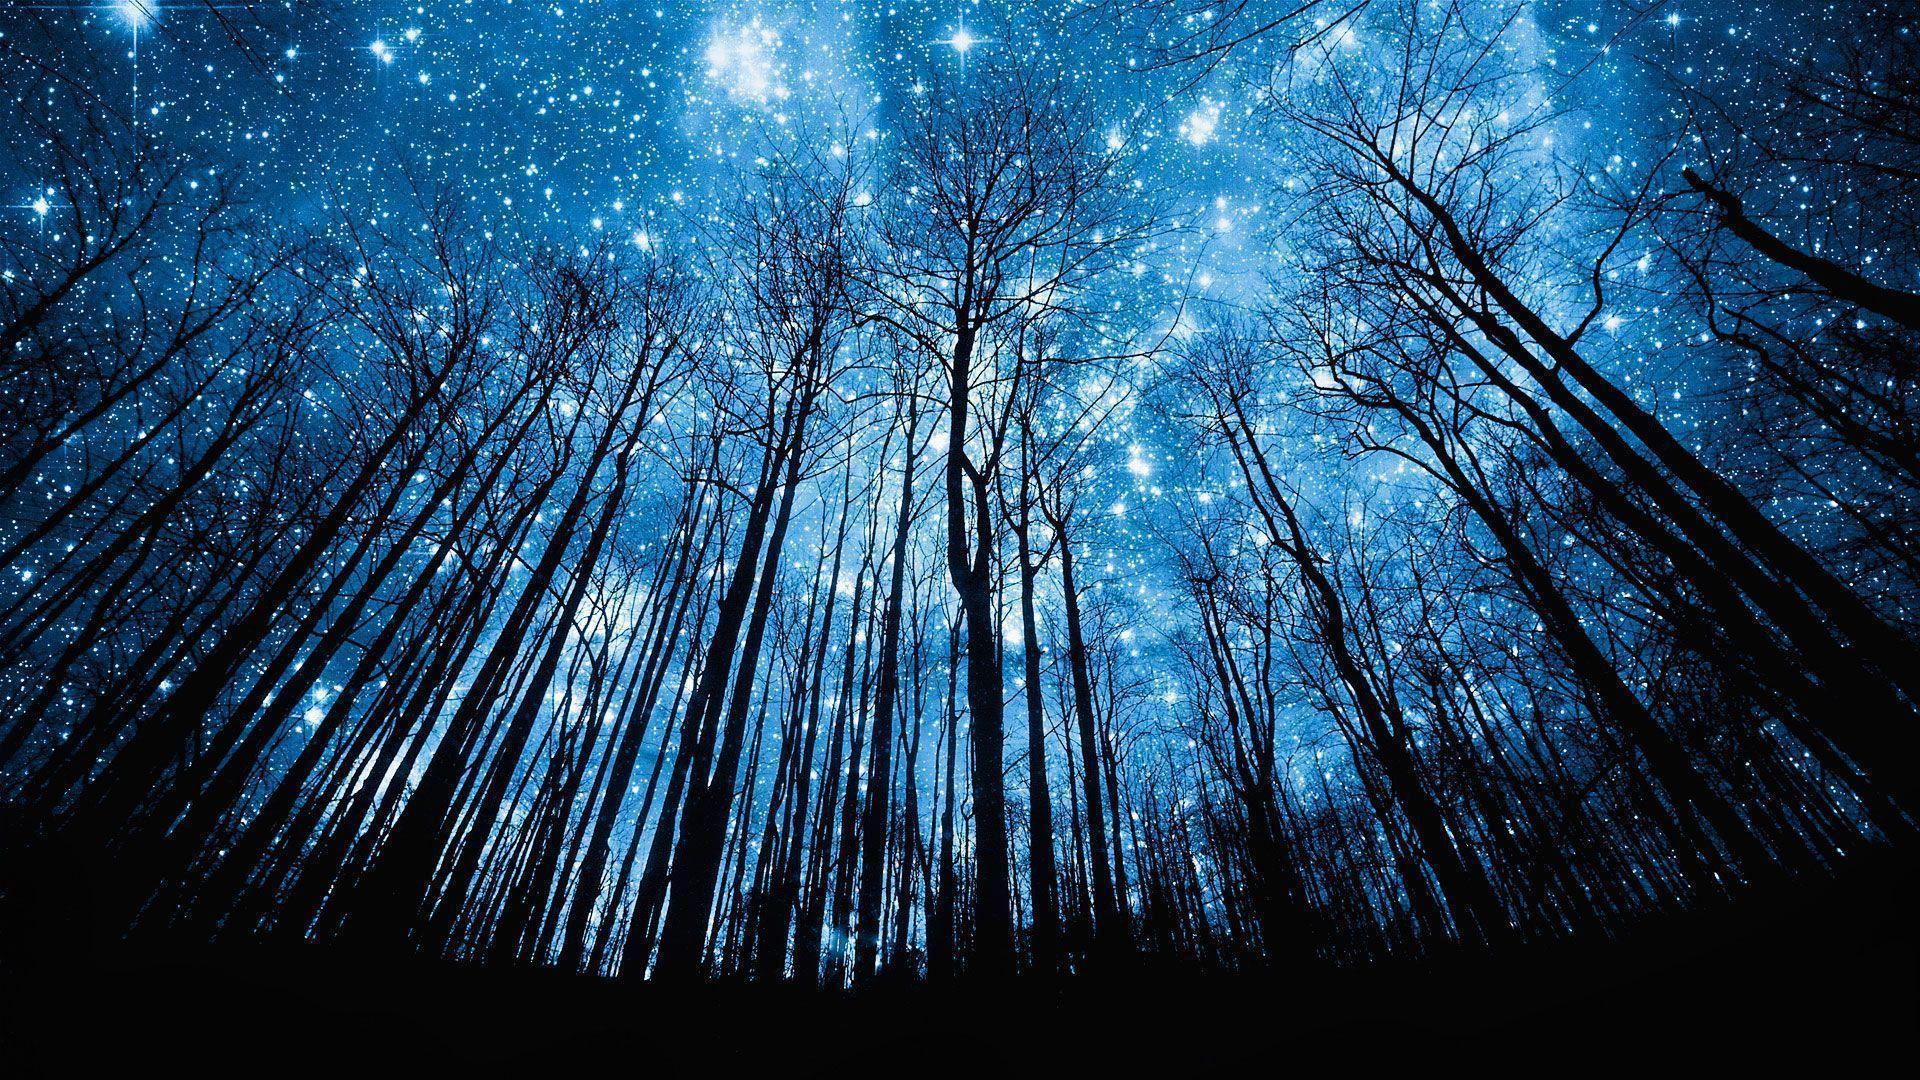 Nighttime Sky With Stars